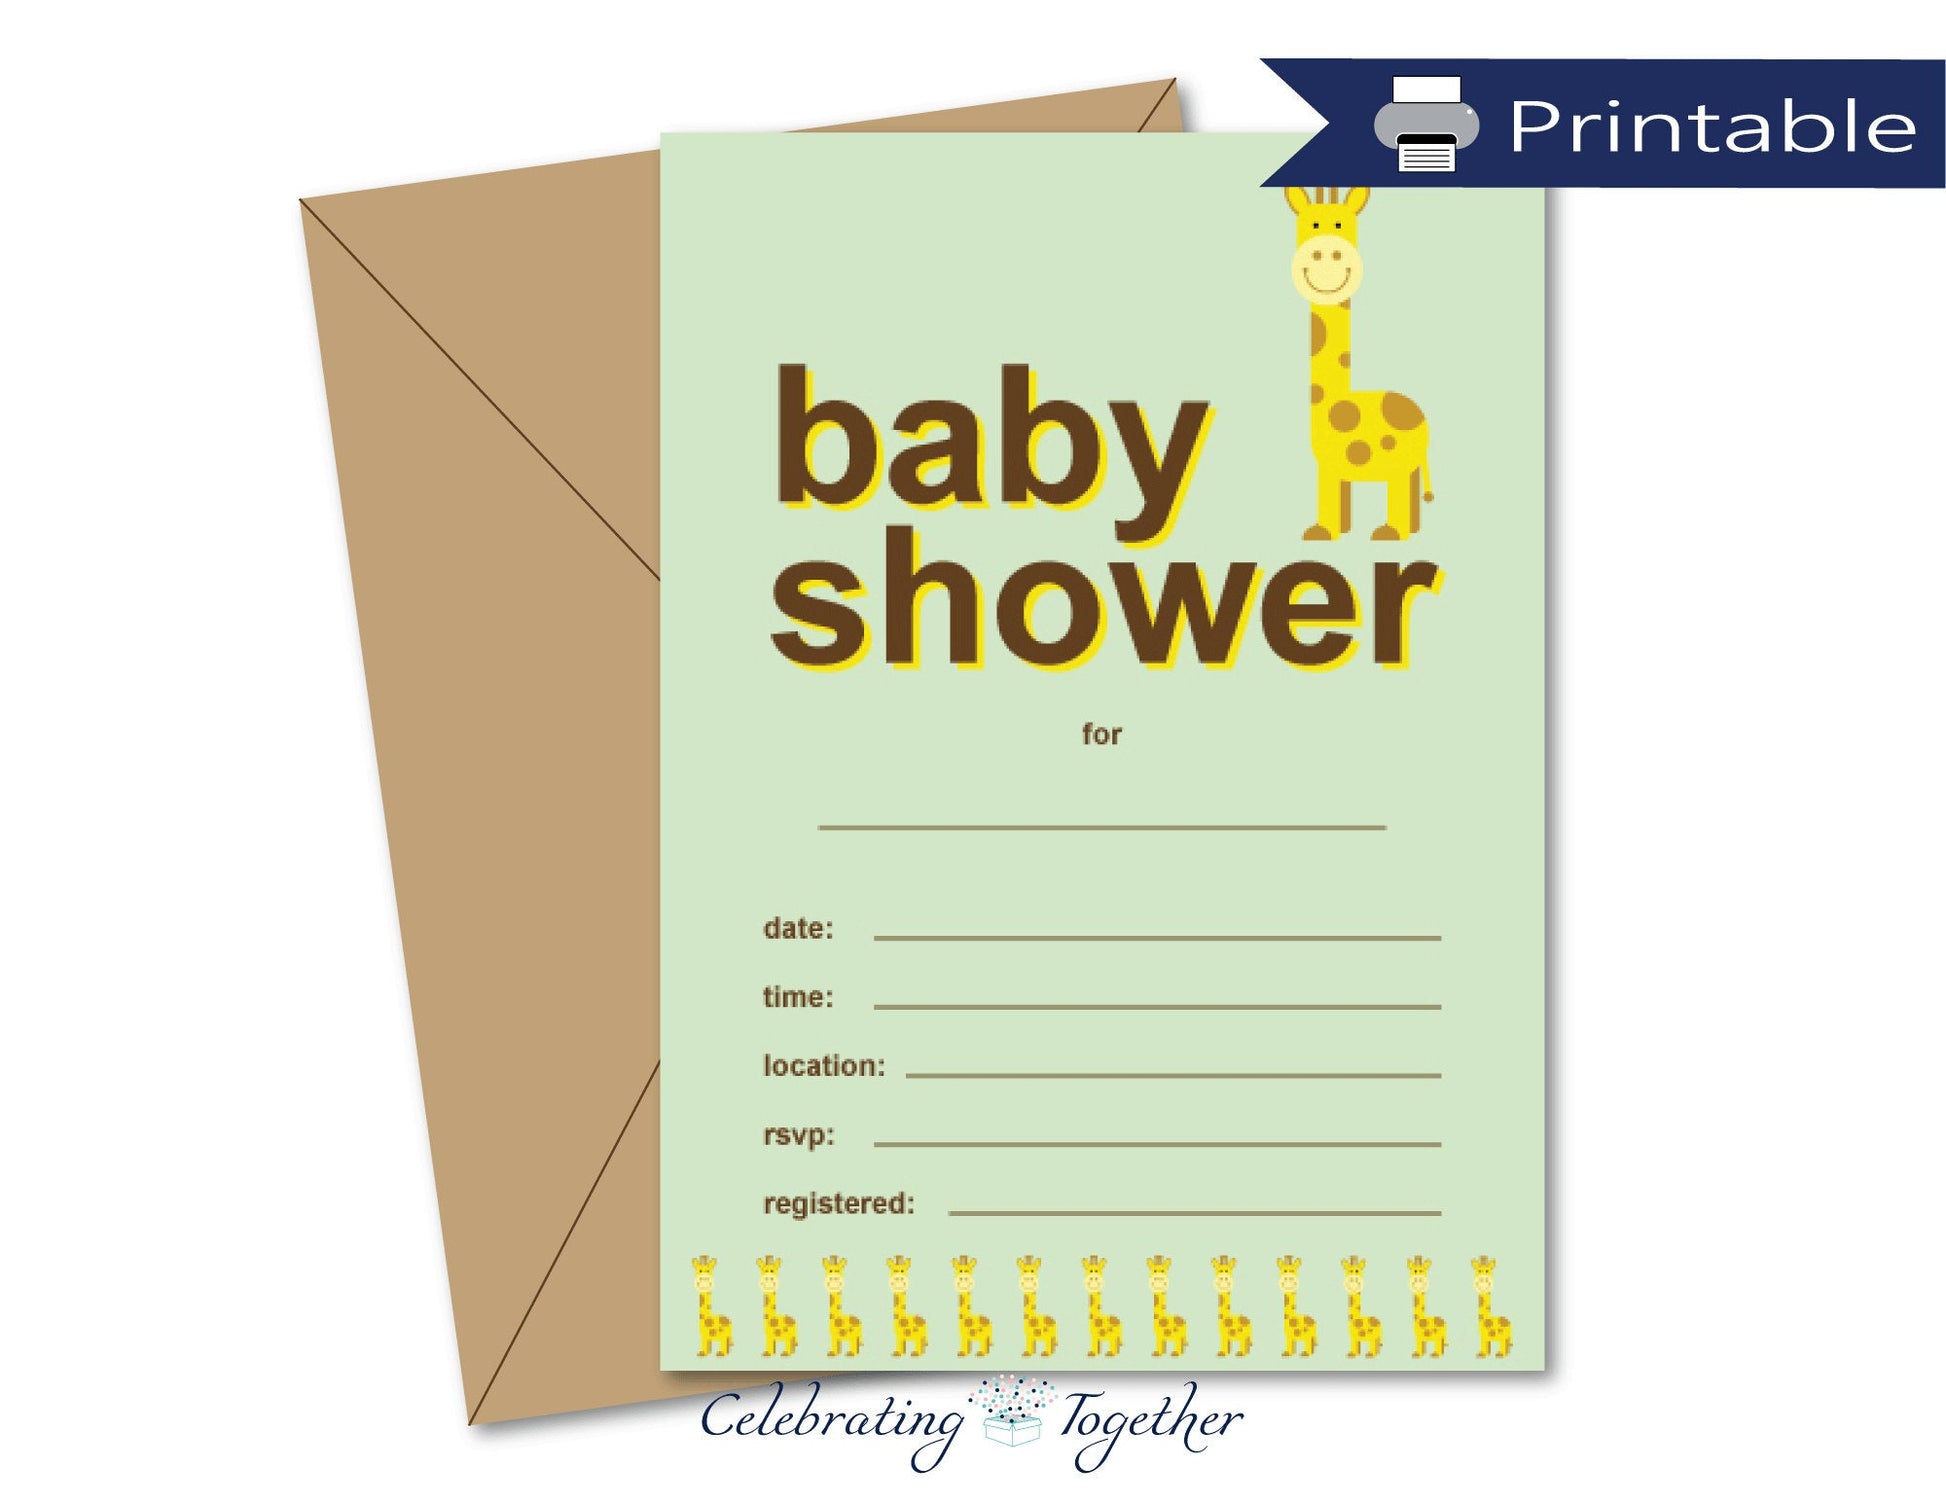 printable giraffe blank baby shower invitations - Celebrating Together